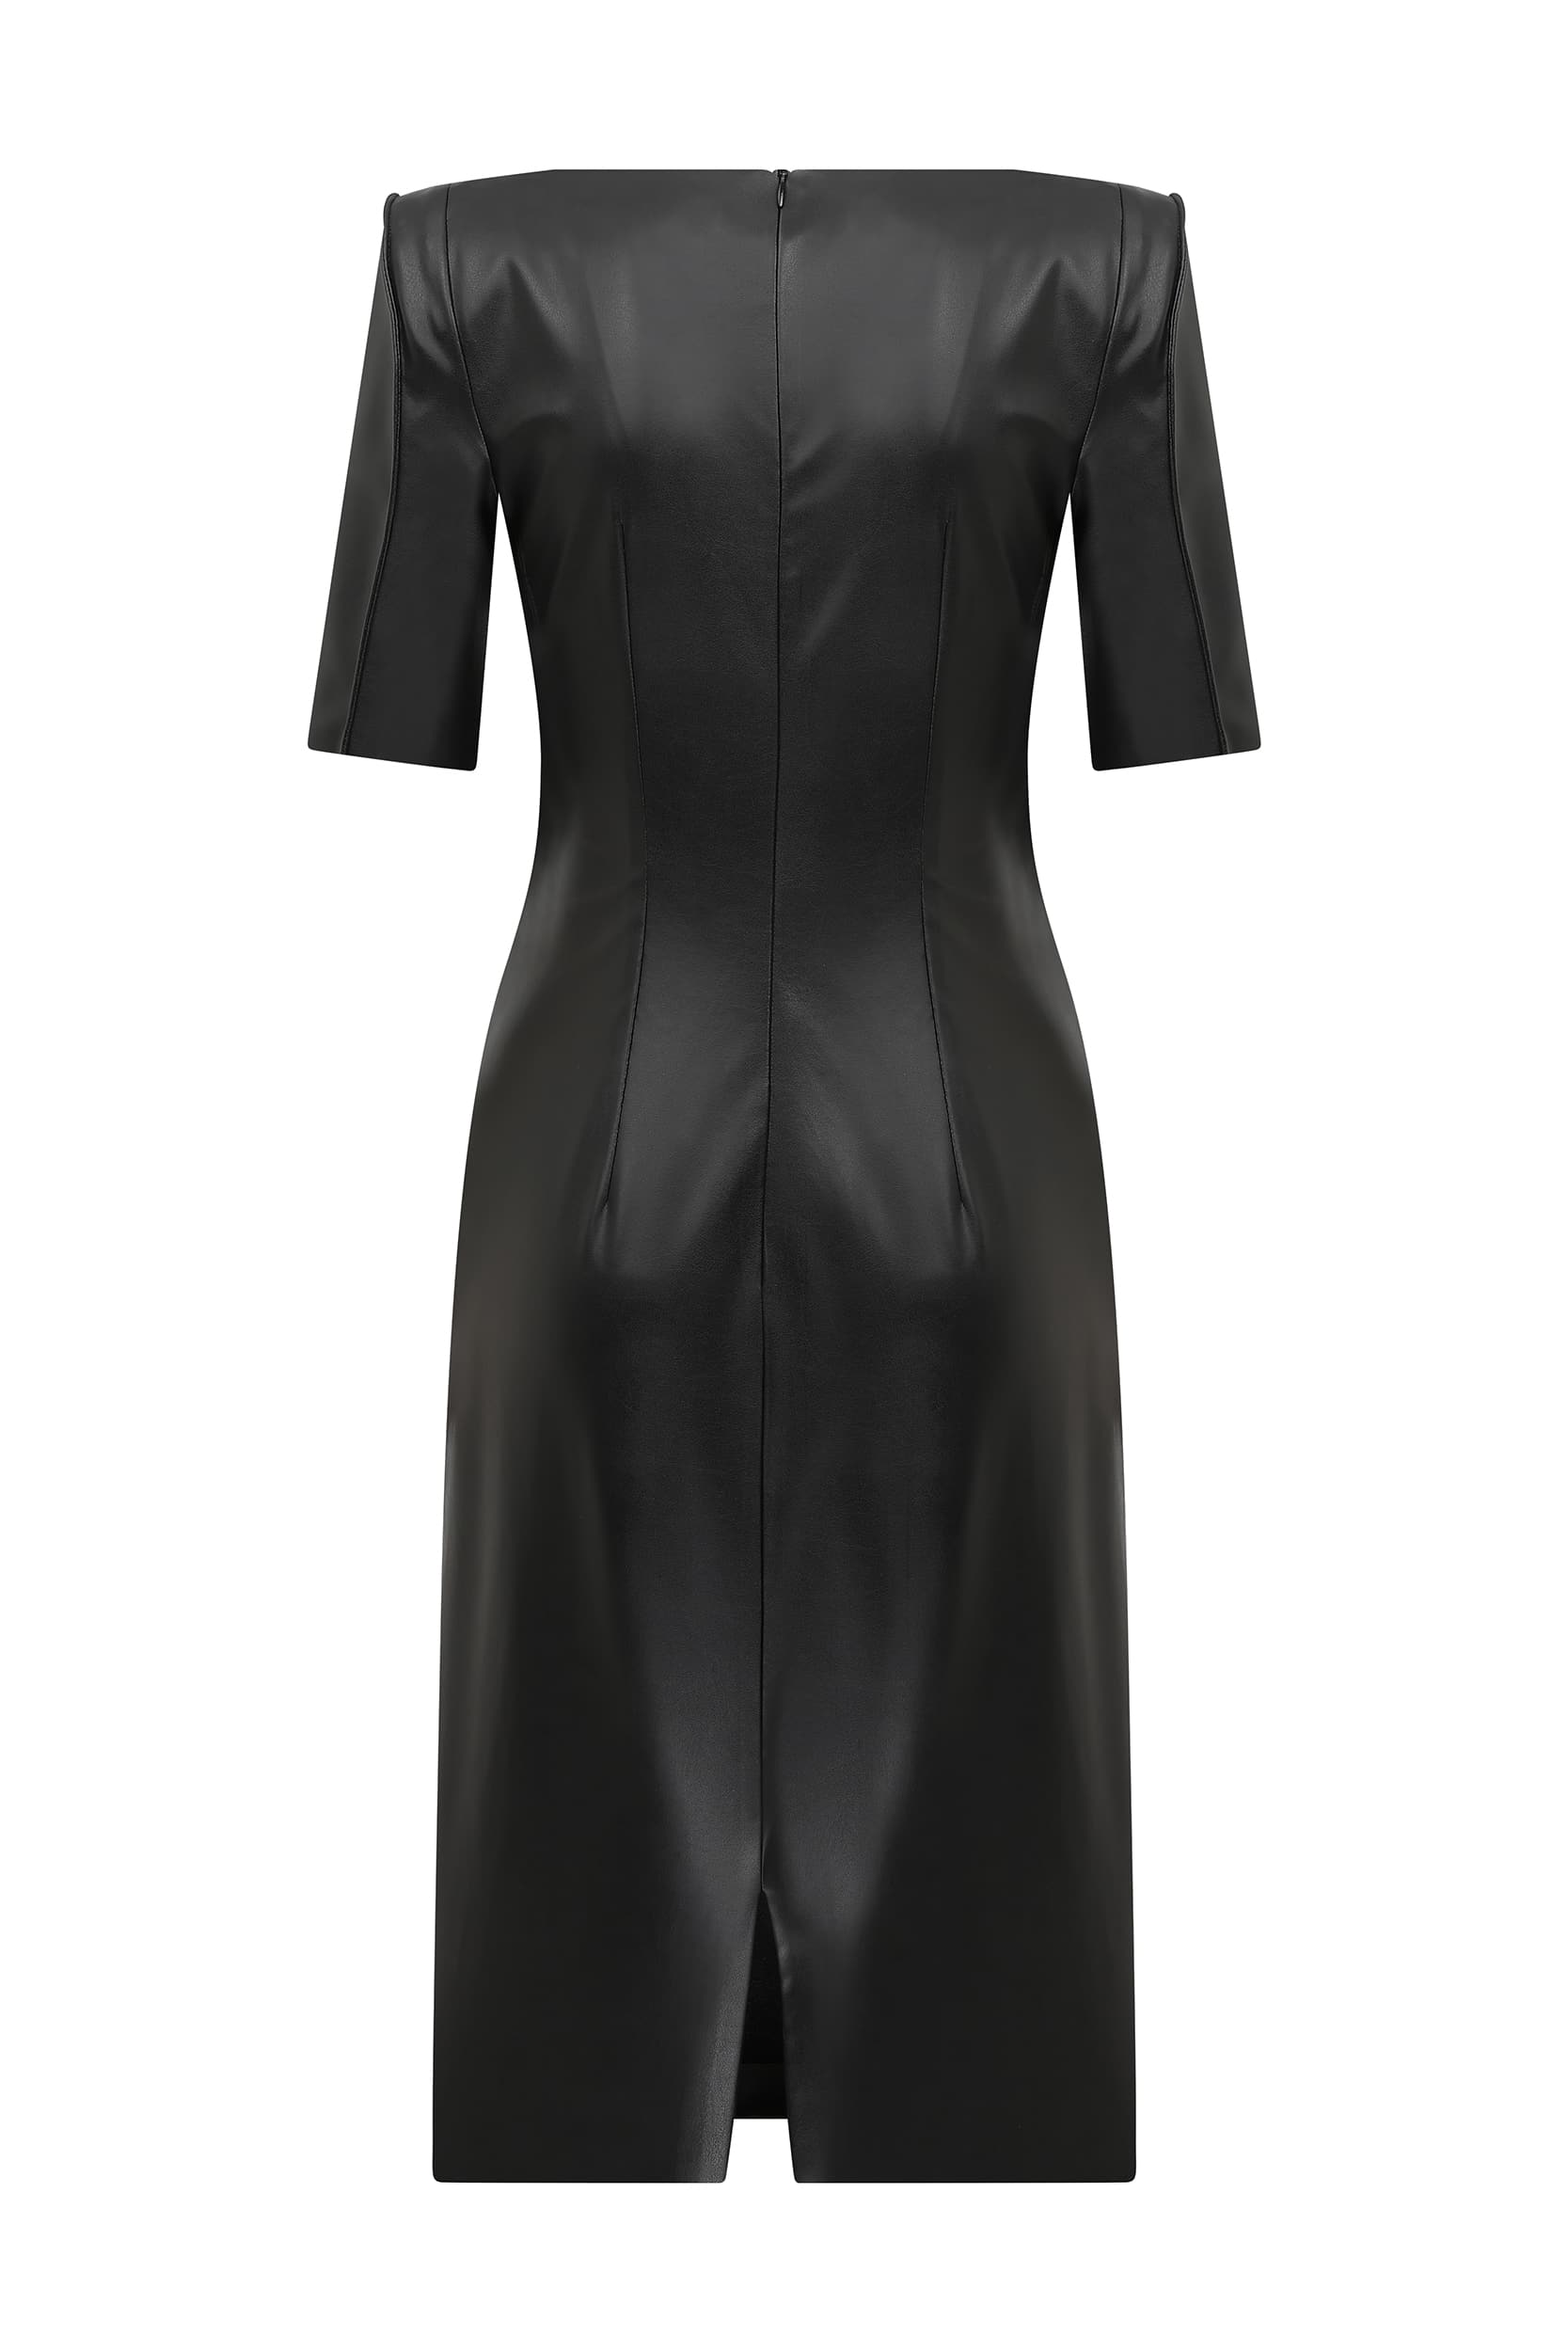 Sassy Black Short Sleeve Dress --[BLACK]